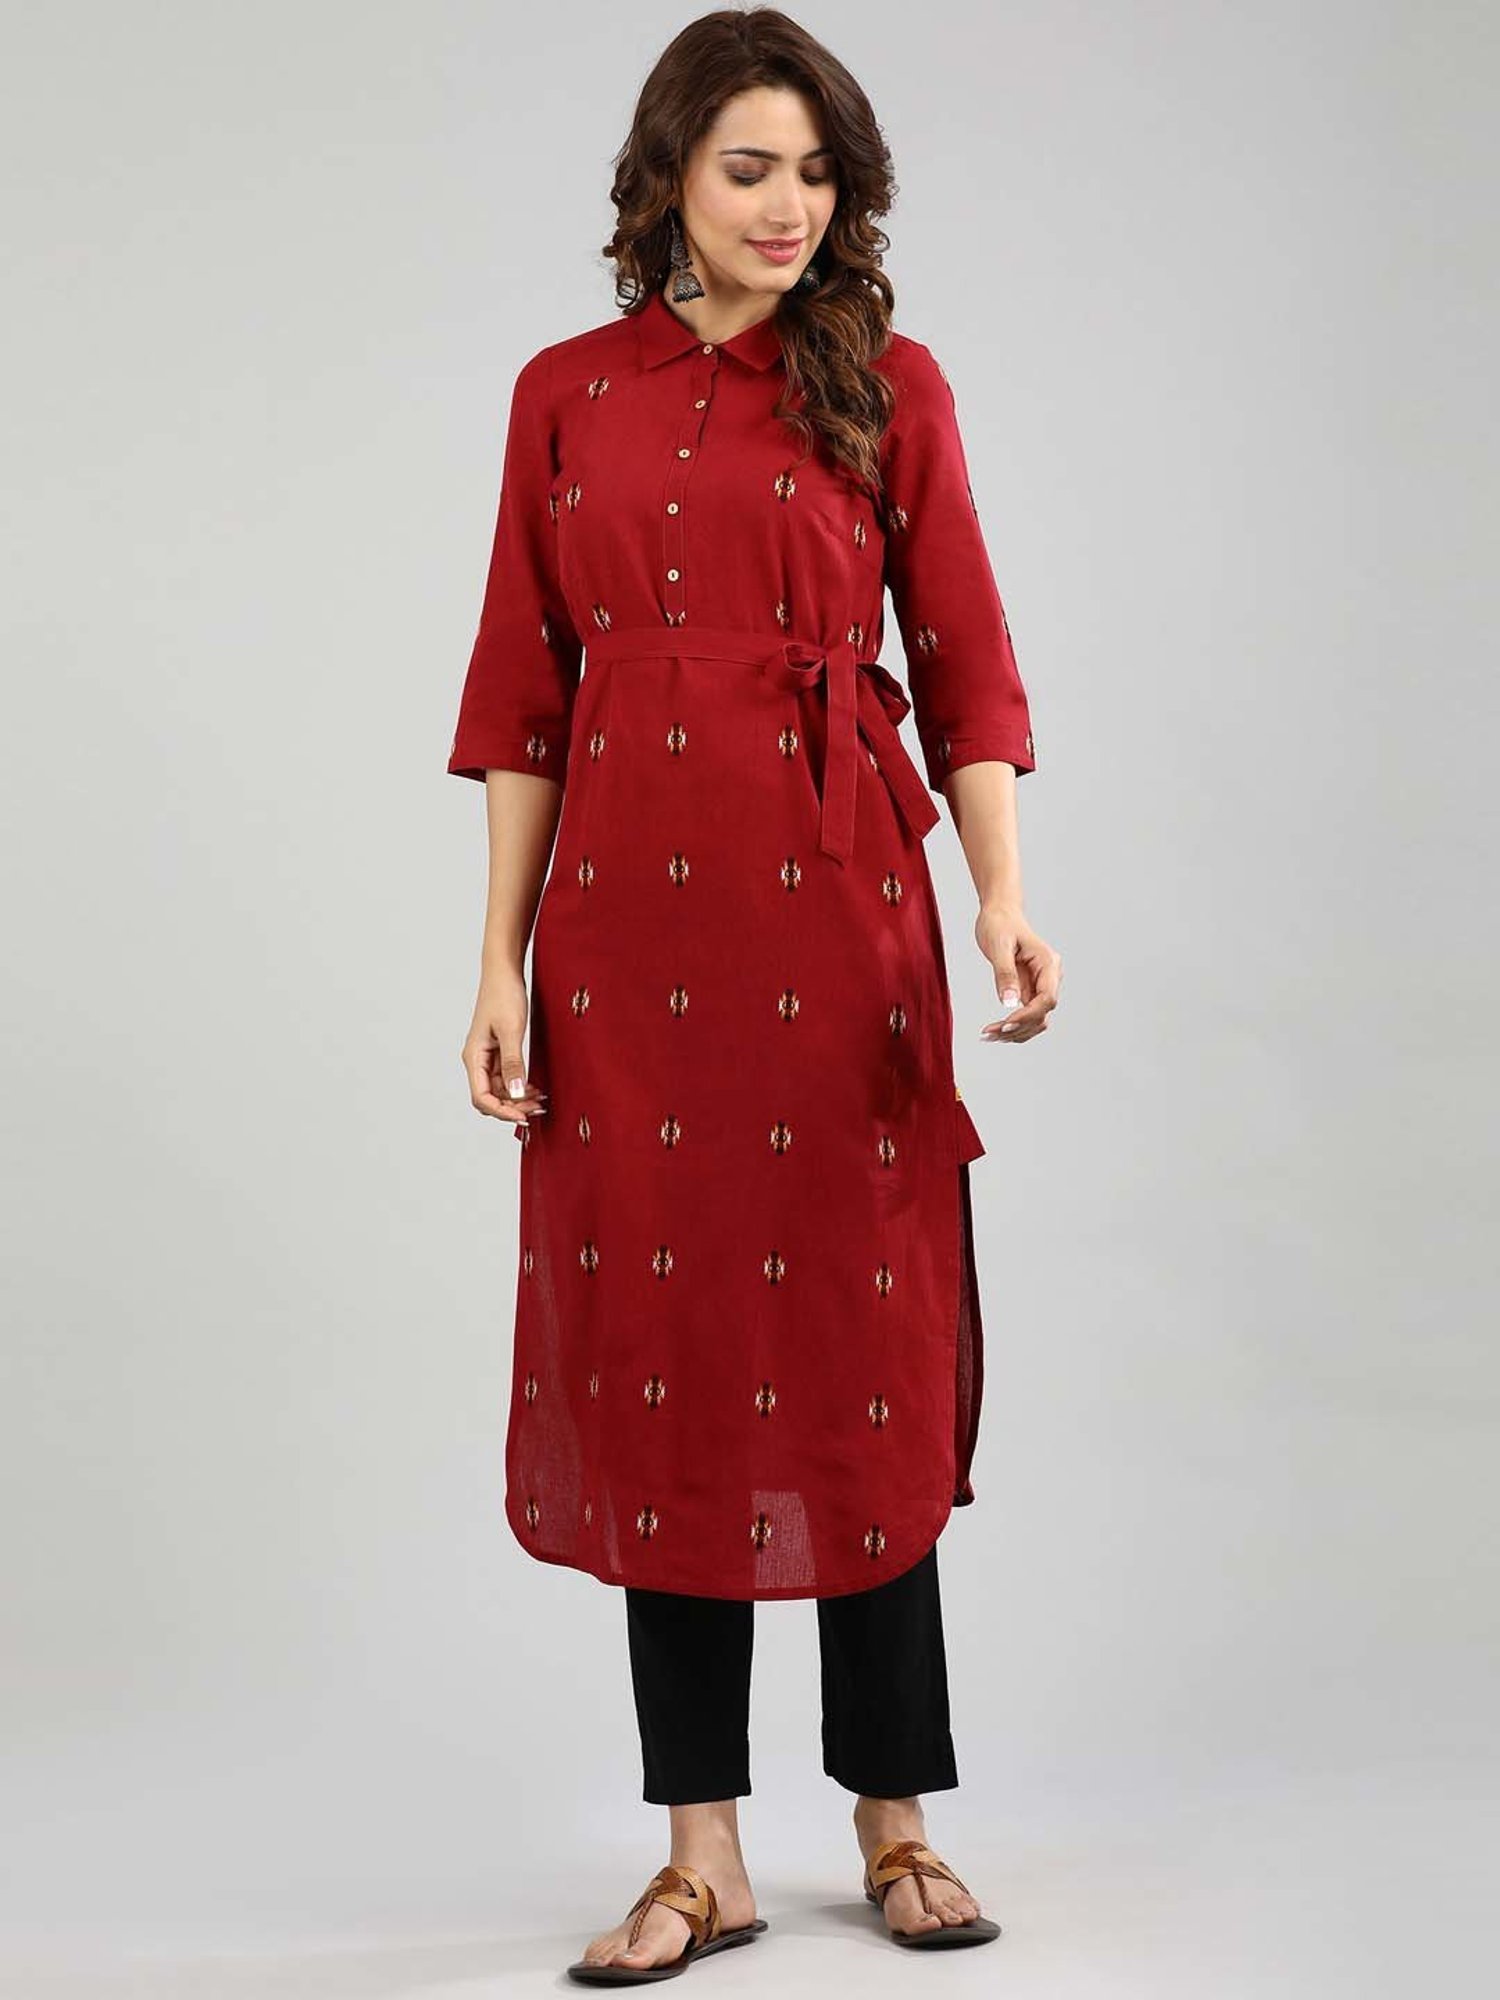 Buy Aurelia Ethnicwear At Best Prices Online In India